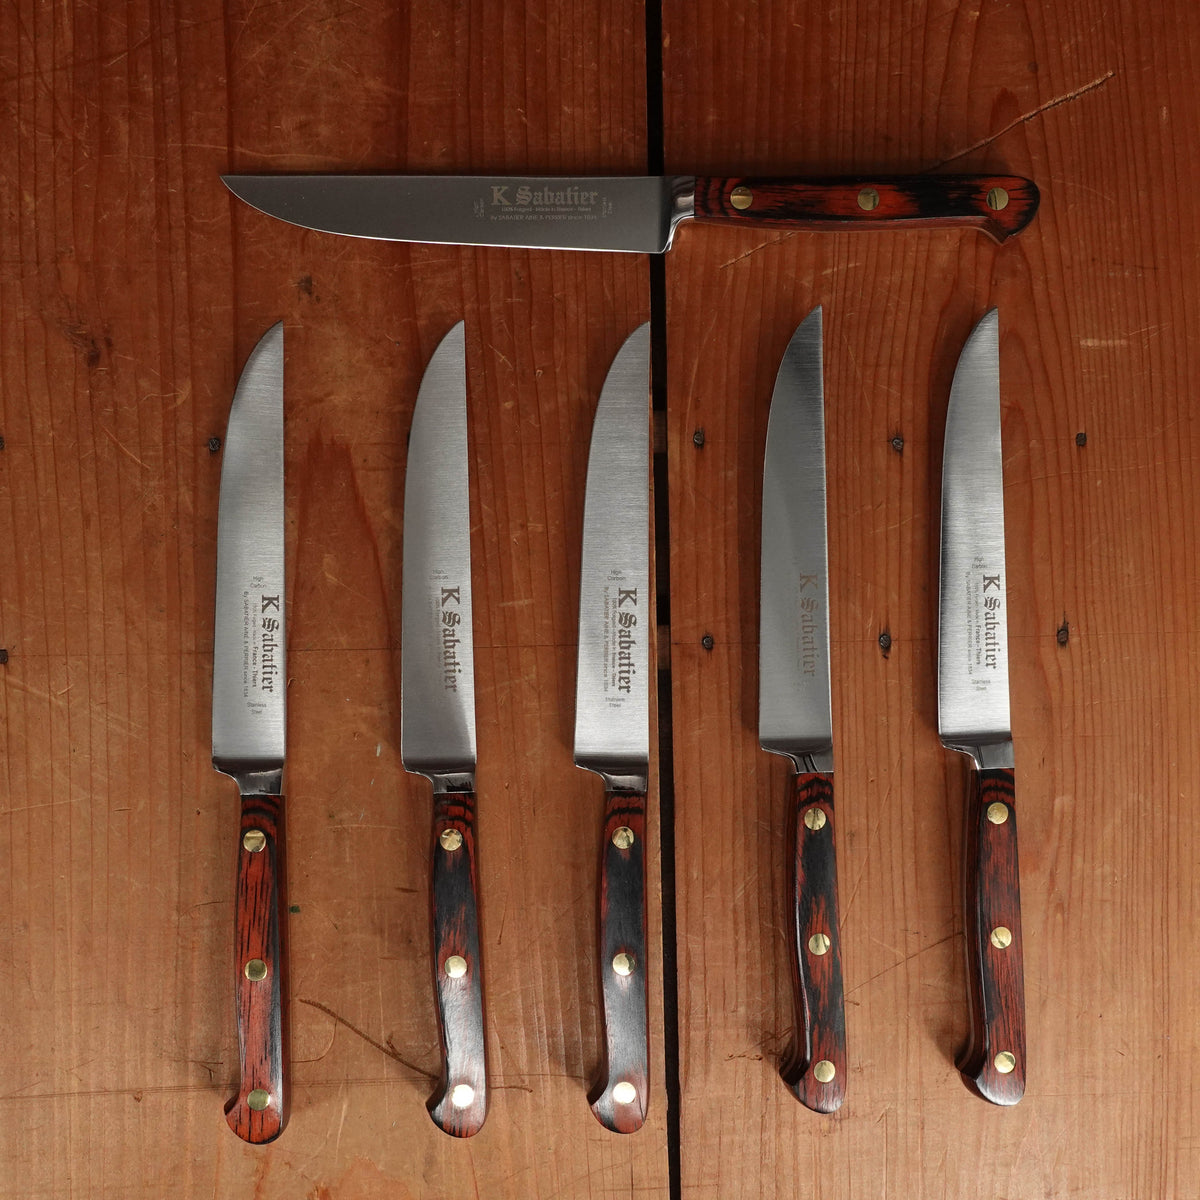 K Sabatier Auvergne Stainless Steak Knife Set  - 6 Pieces